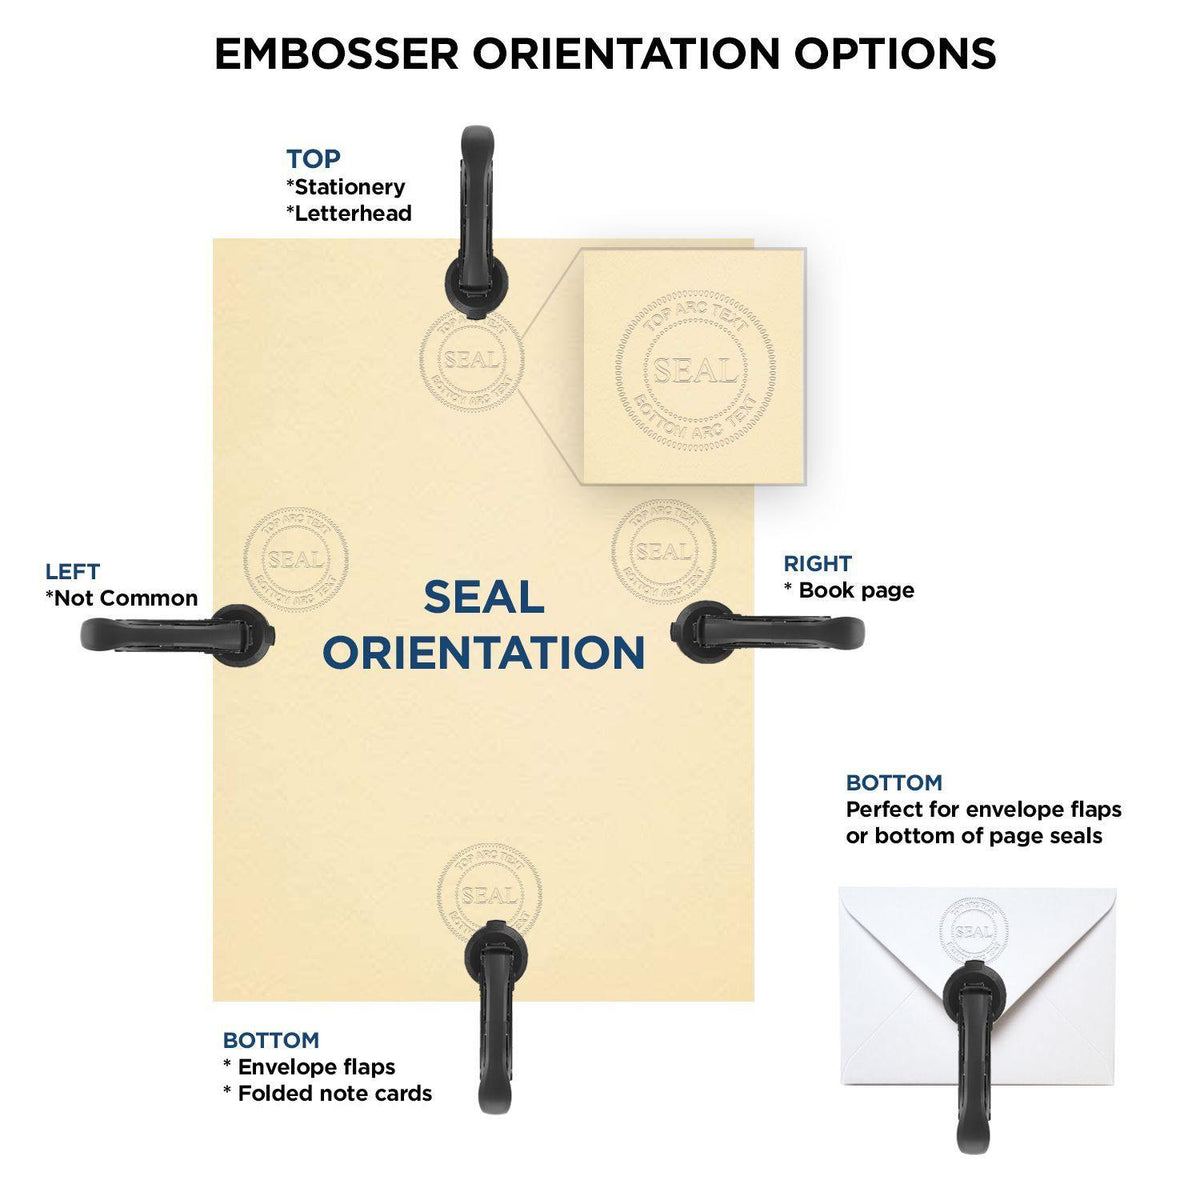 Geologist Hybrid Seal Embosser - Engineer Seal Stamps - Embosser Type_Handheld, Embosser Type_Hybrid, Type of Use_Professional